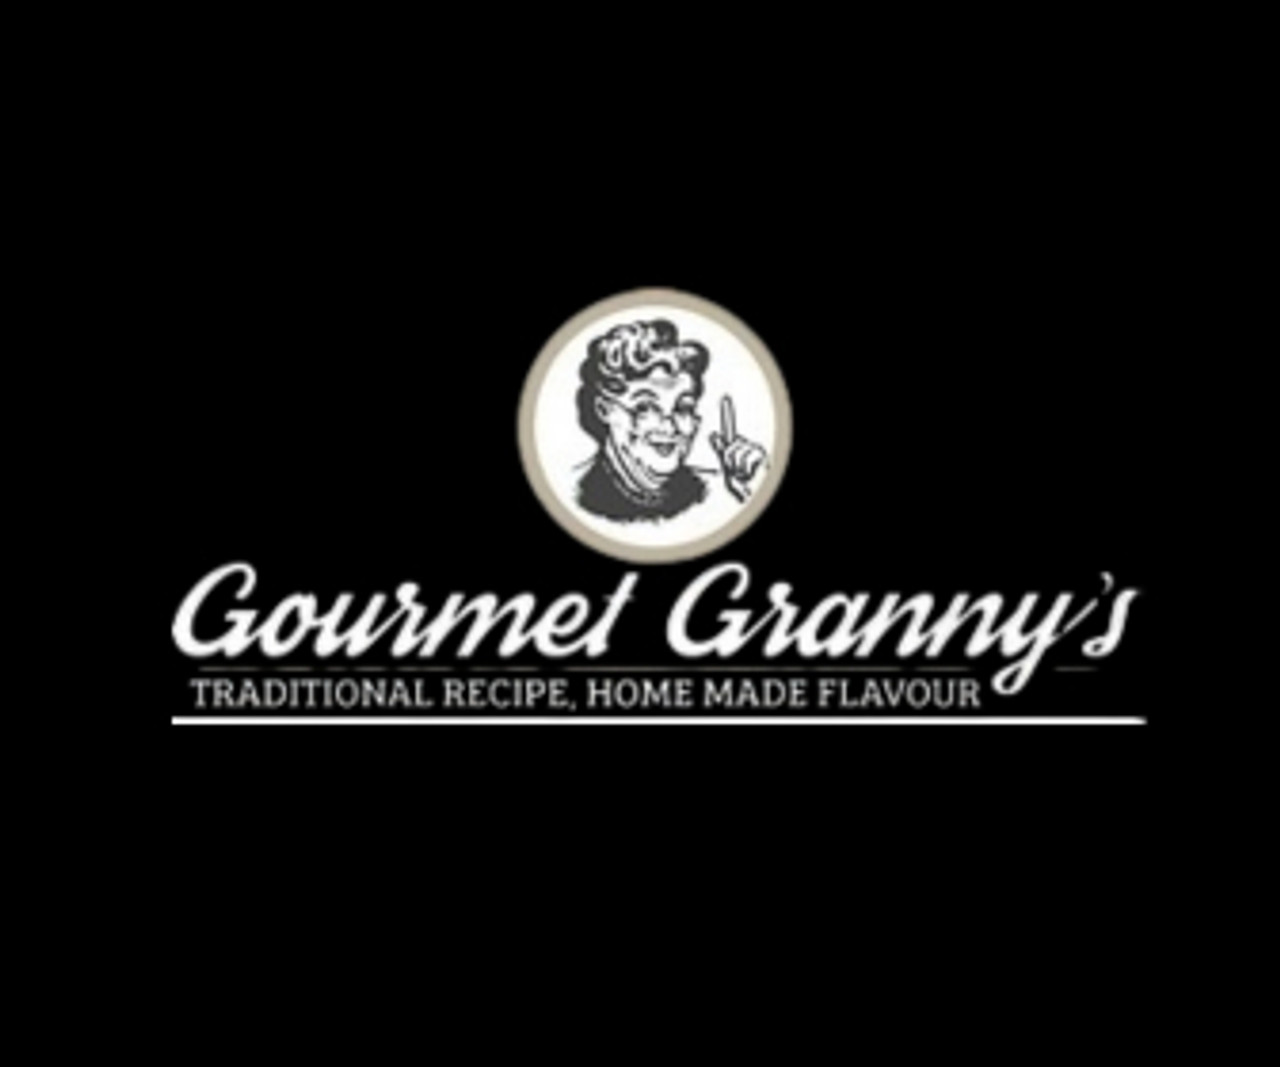 Gourmet Granny's